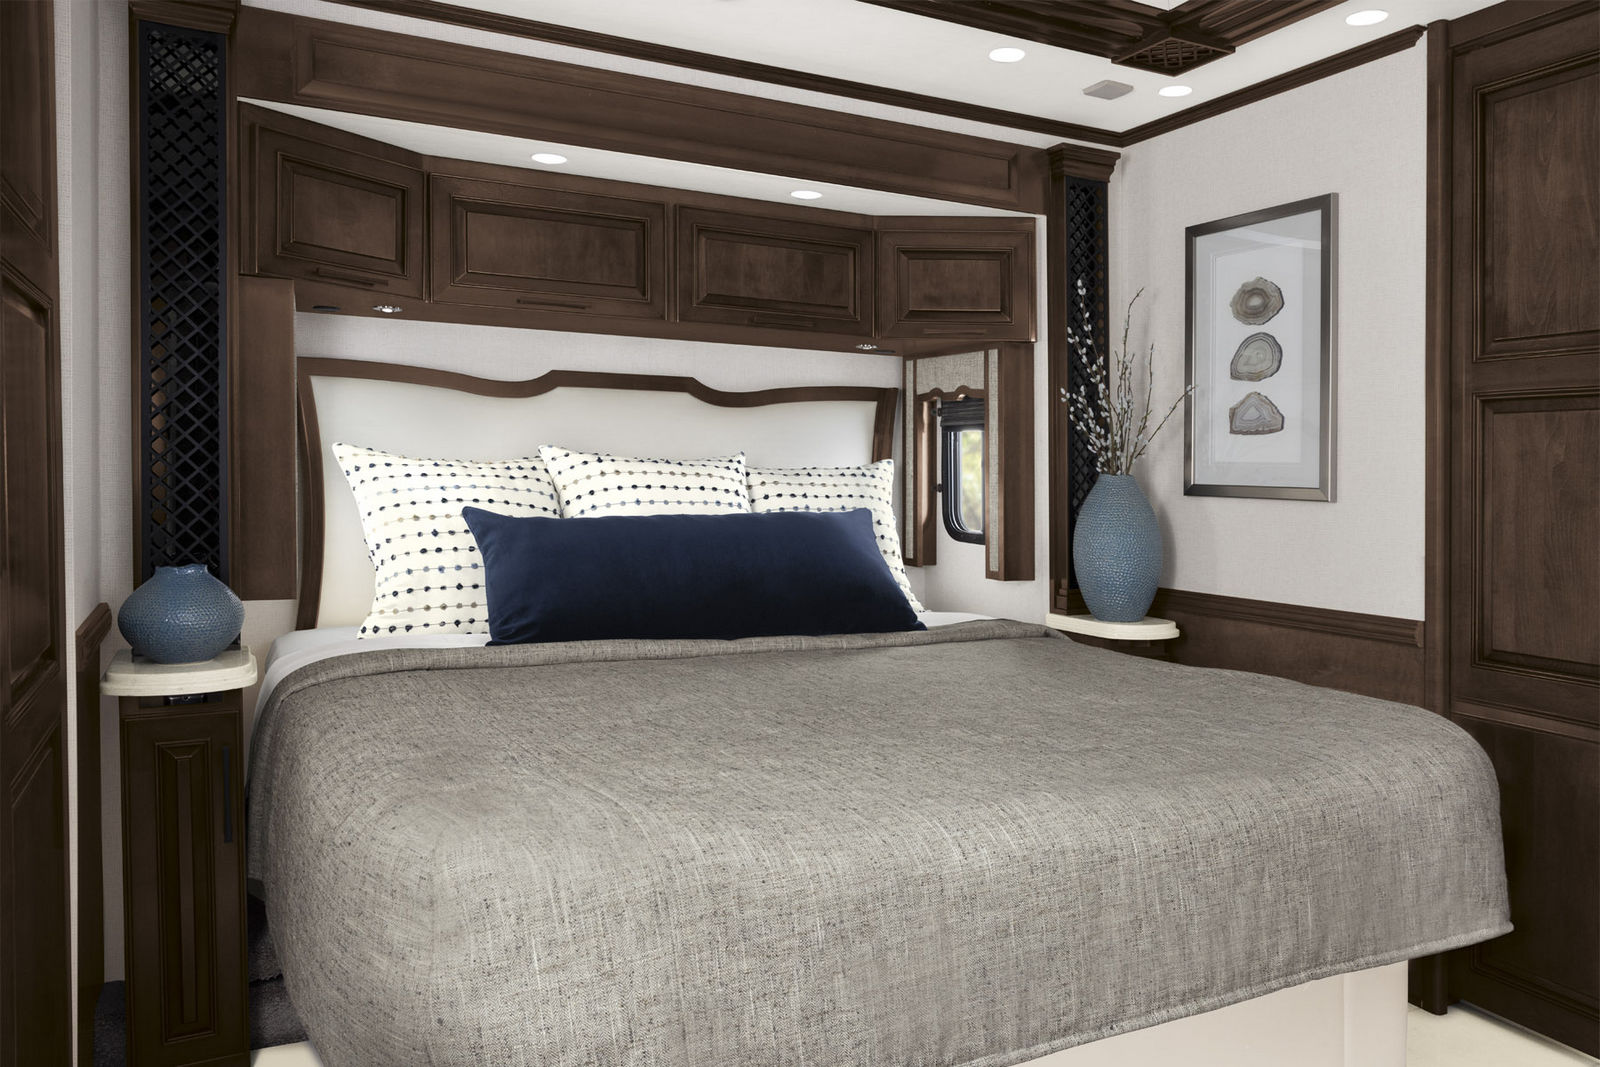 Amazing Scania RV Has Three Bedrooms With Garage And Posh Interior